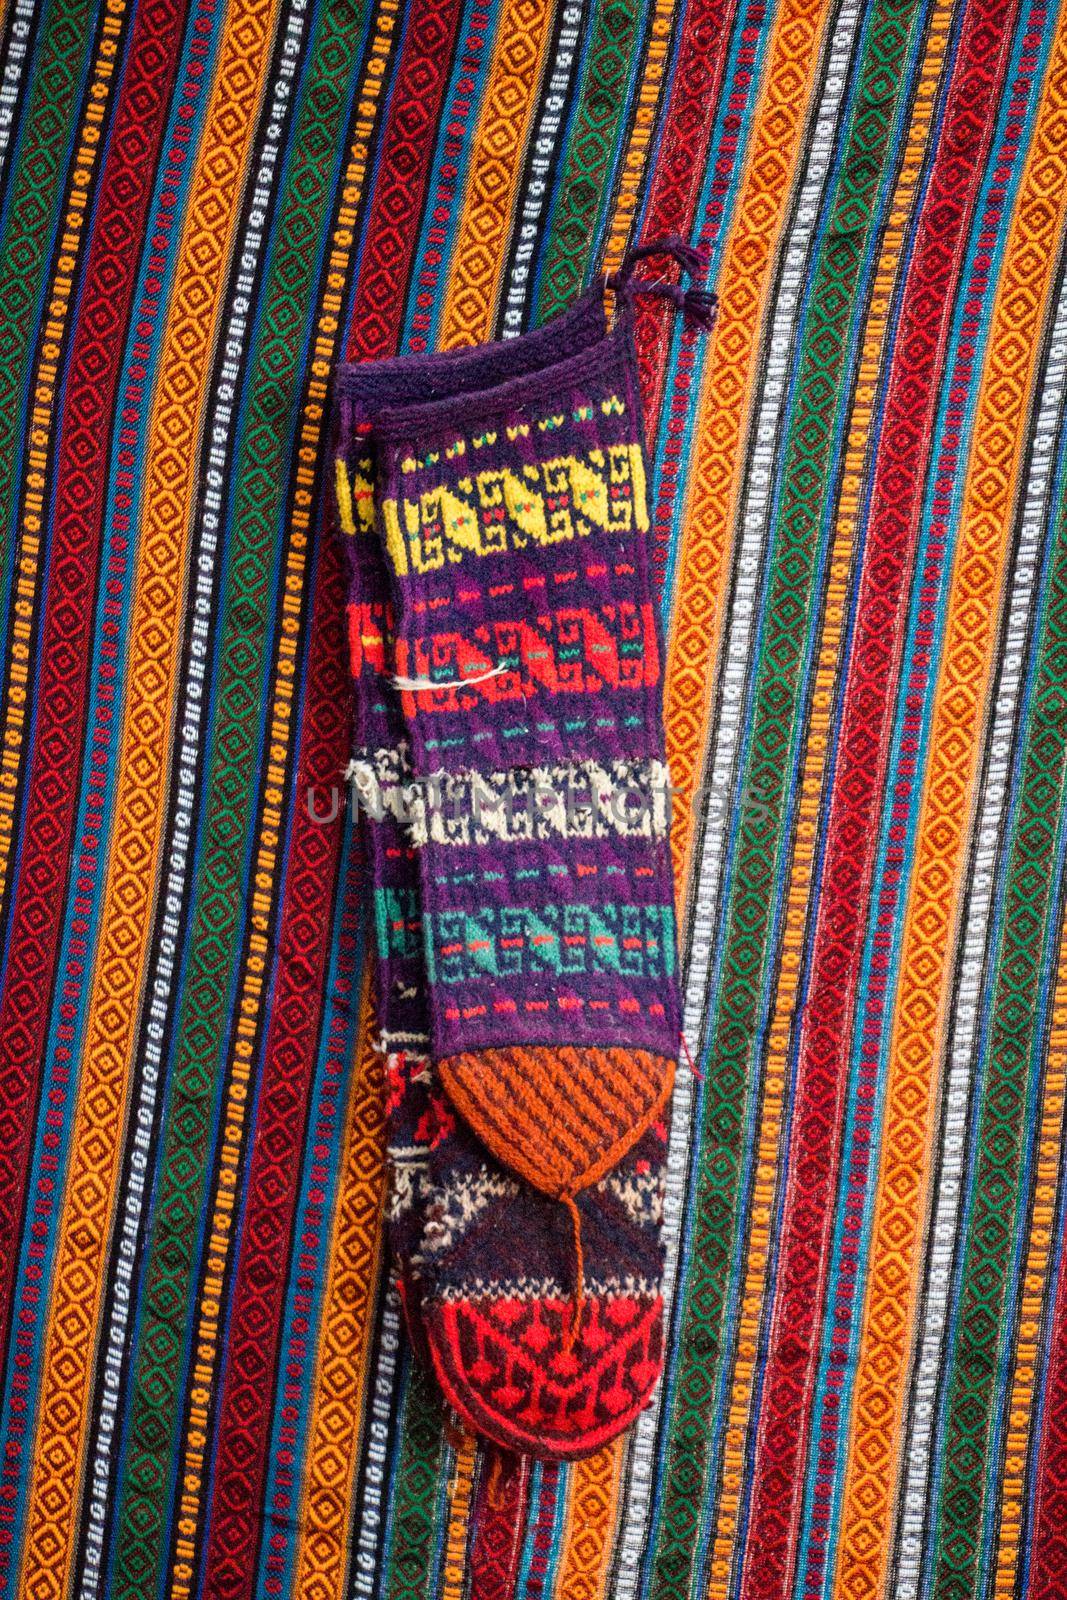 handmade colorful Turkish ethnic styled woven socks by berkay